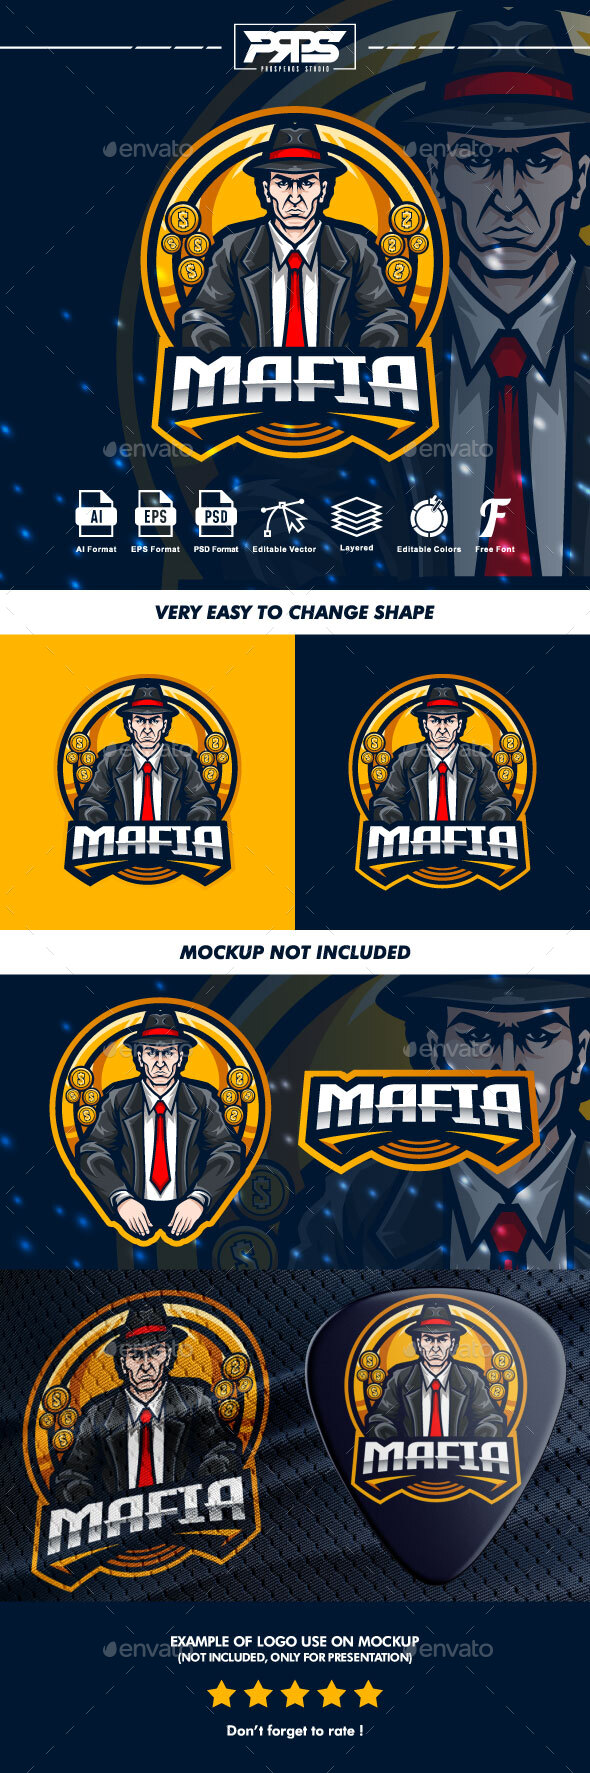 [DOWNLOAD]Mafia Esport Logo